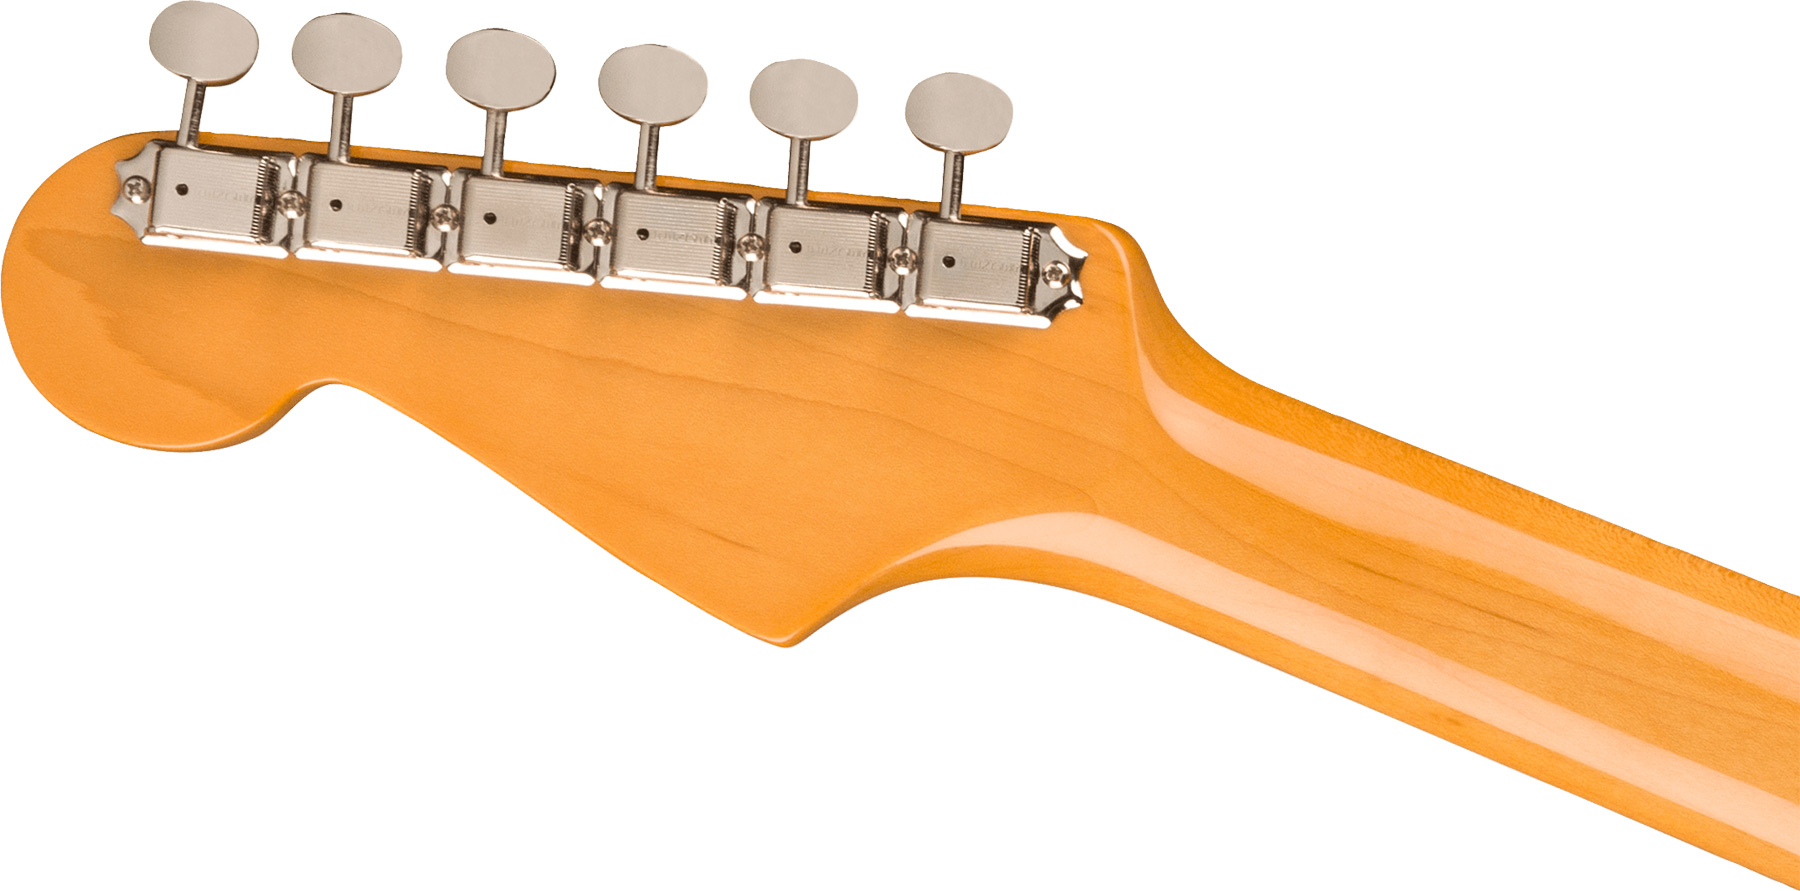 Fender Strat 1961 American Vintage Ii Usa 3s Trem Rw - Olympic White - Str shape electric guitar - Variation 3